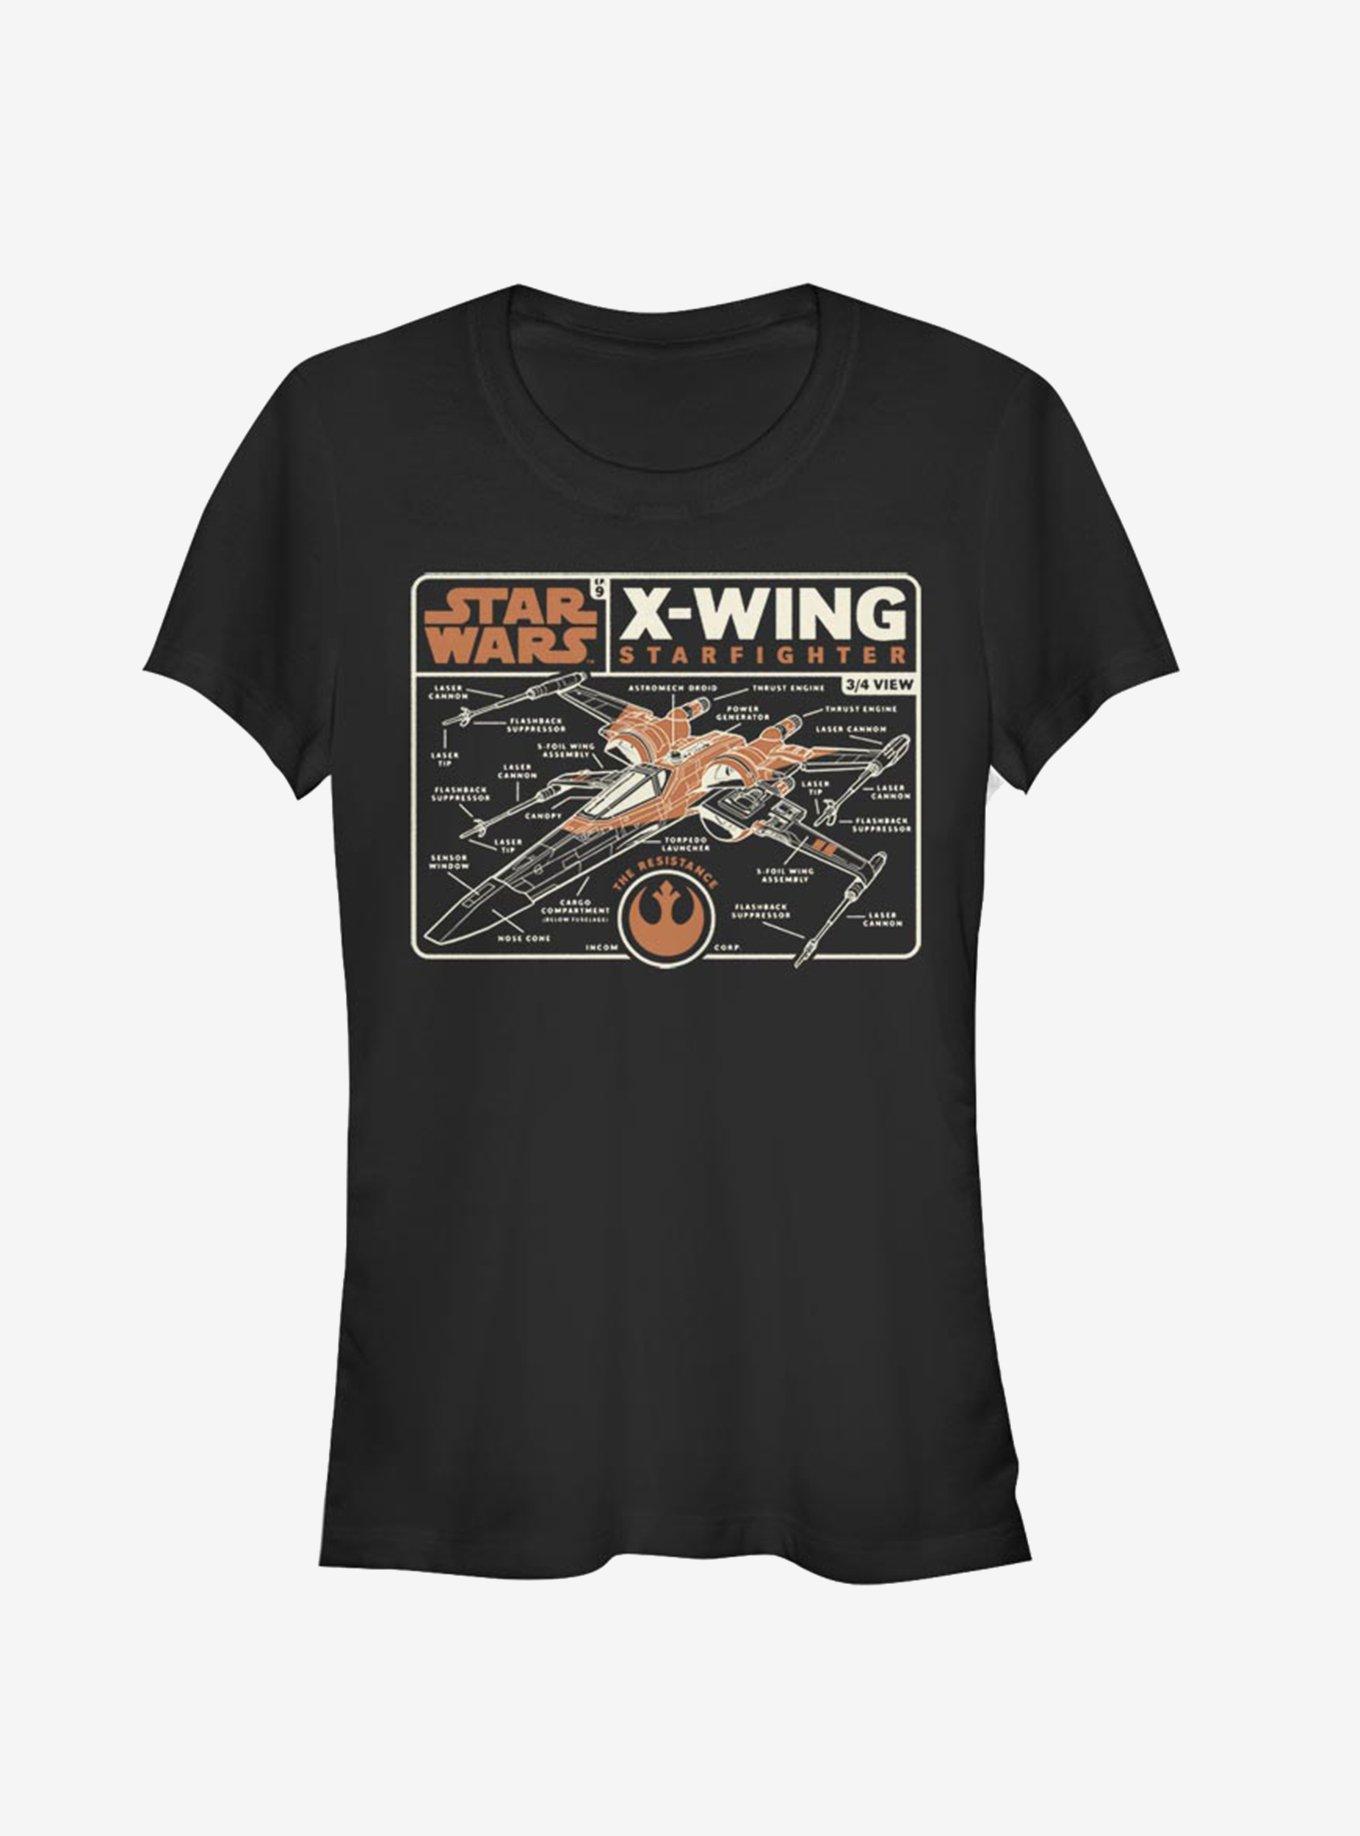 Star Wars Episode IX The Rise Of Skywalker Starfighter Schematic Girls T-Shirt, BLACK, hi-res